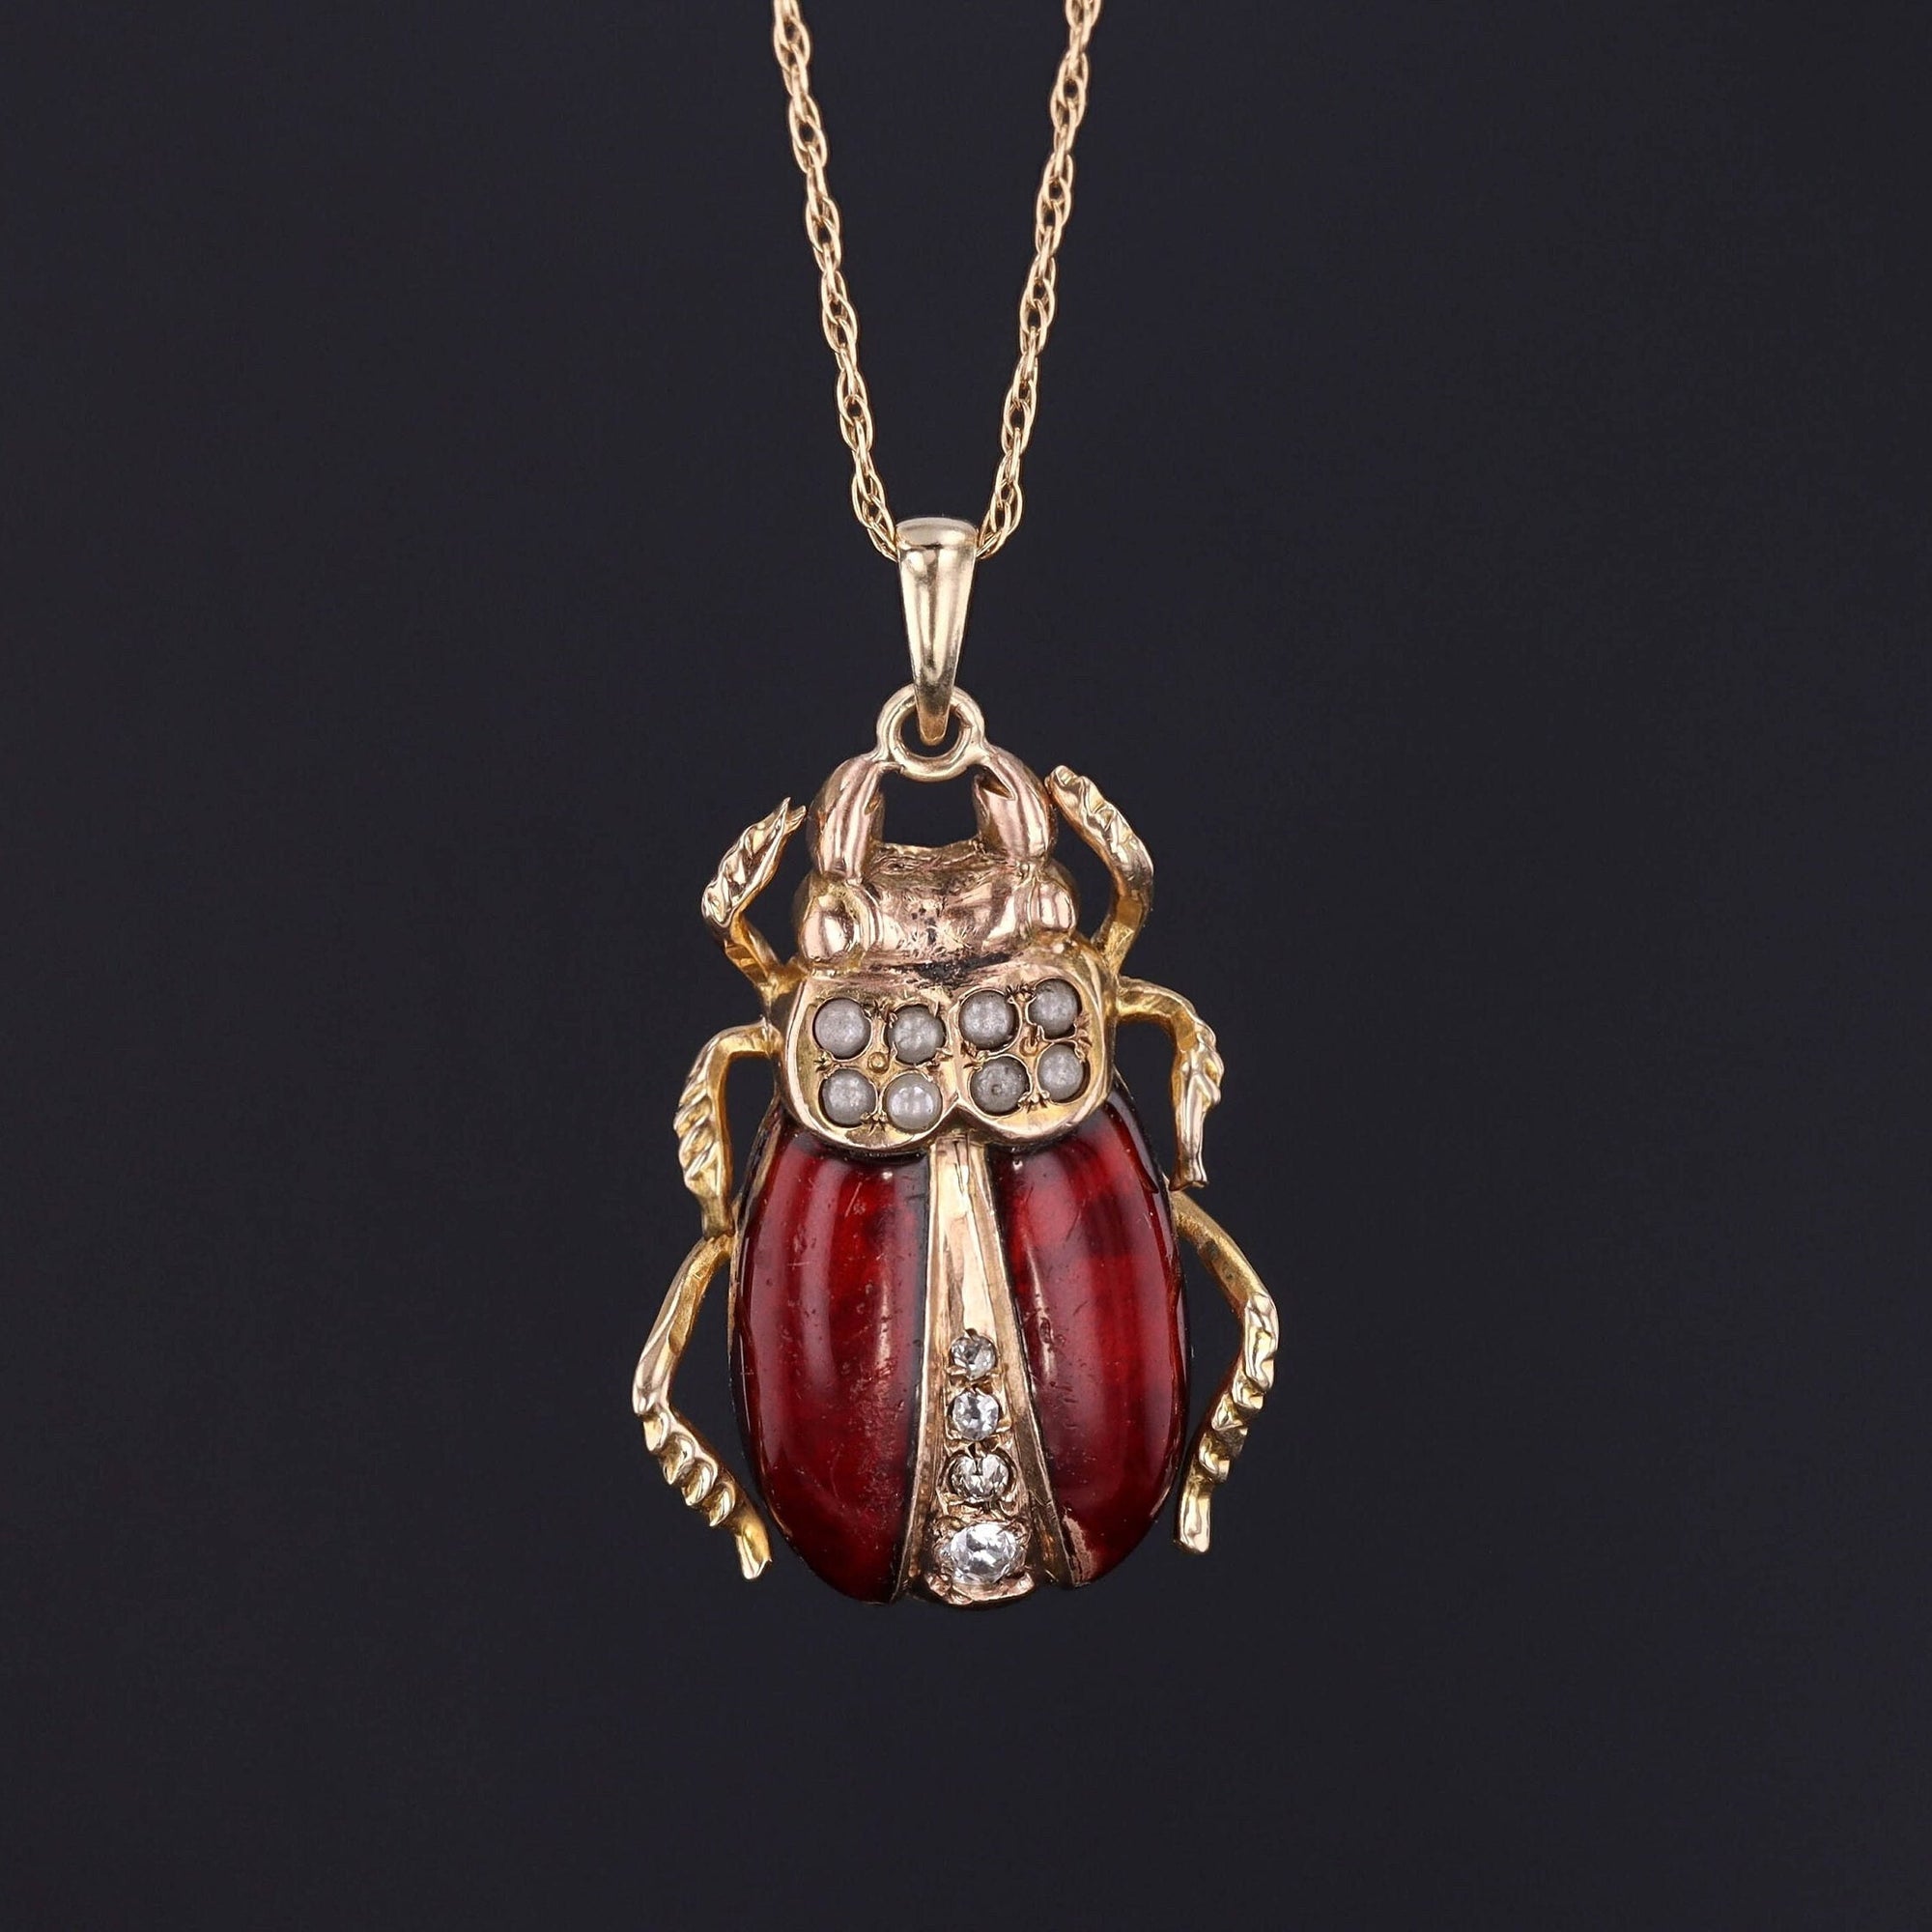 Antique Beetle Pendant | 10k Gold & Enamel Pendant on Optional 14k Chain 